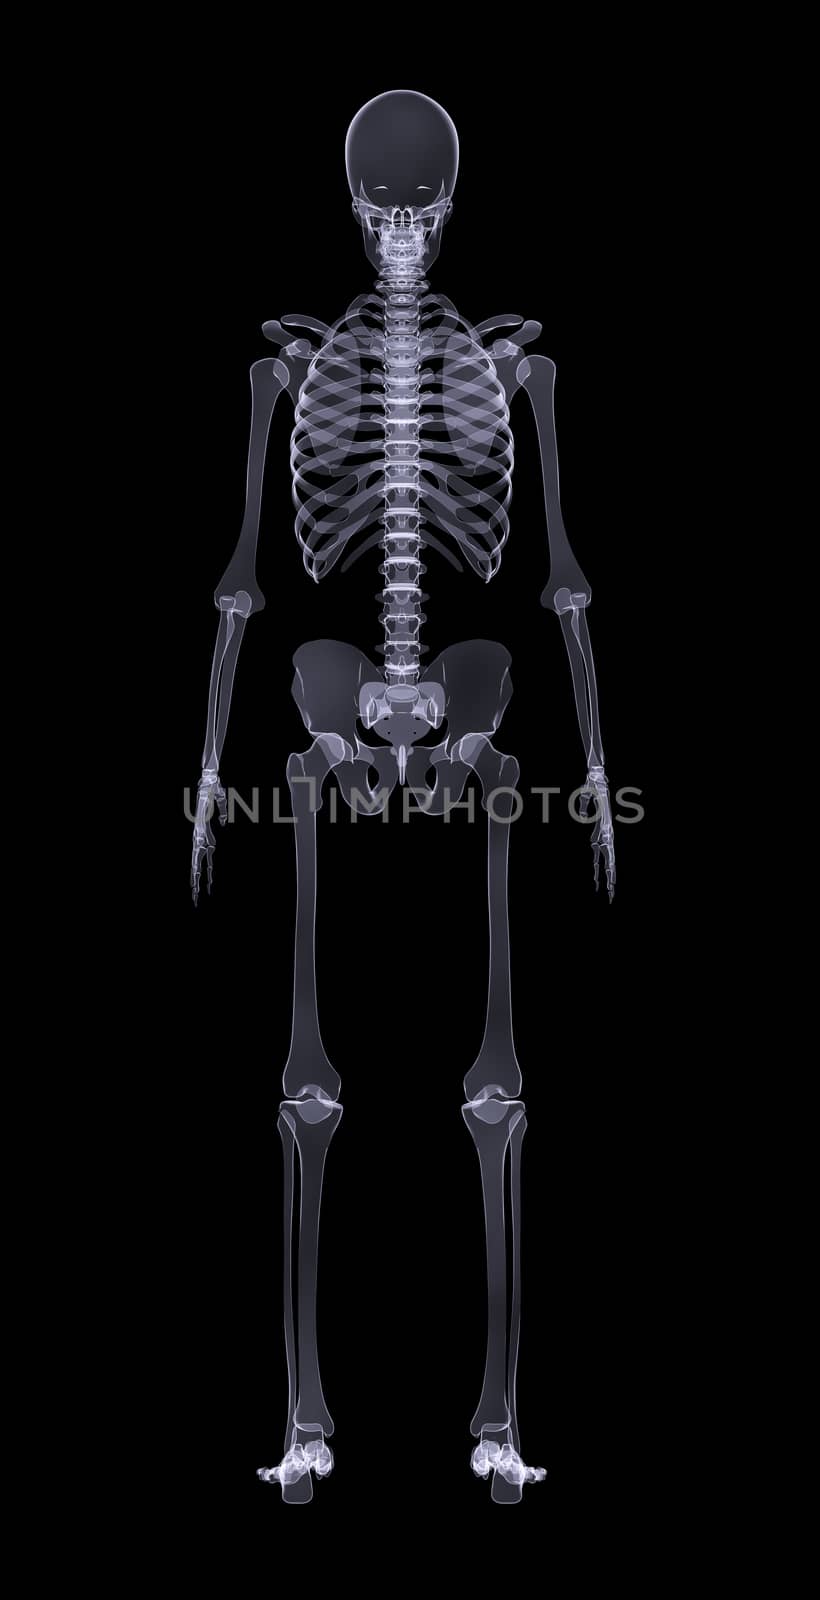 Human skeleton on black, rear view by cherezoff